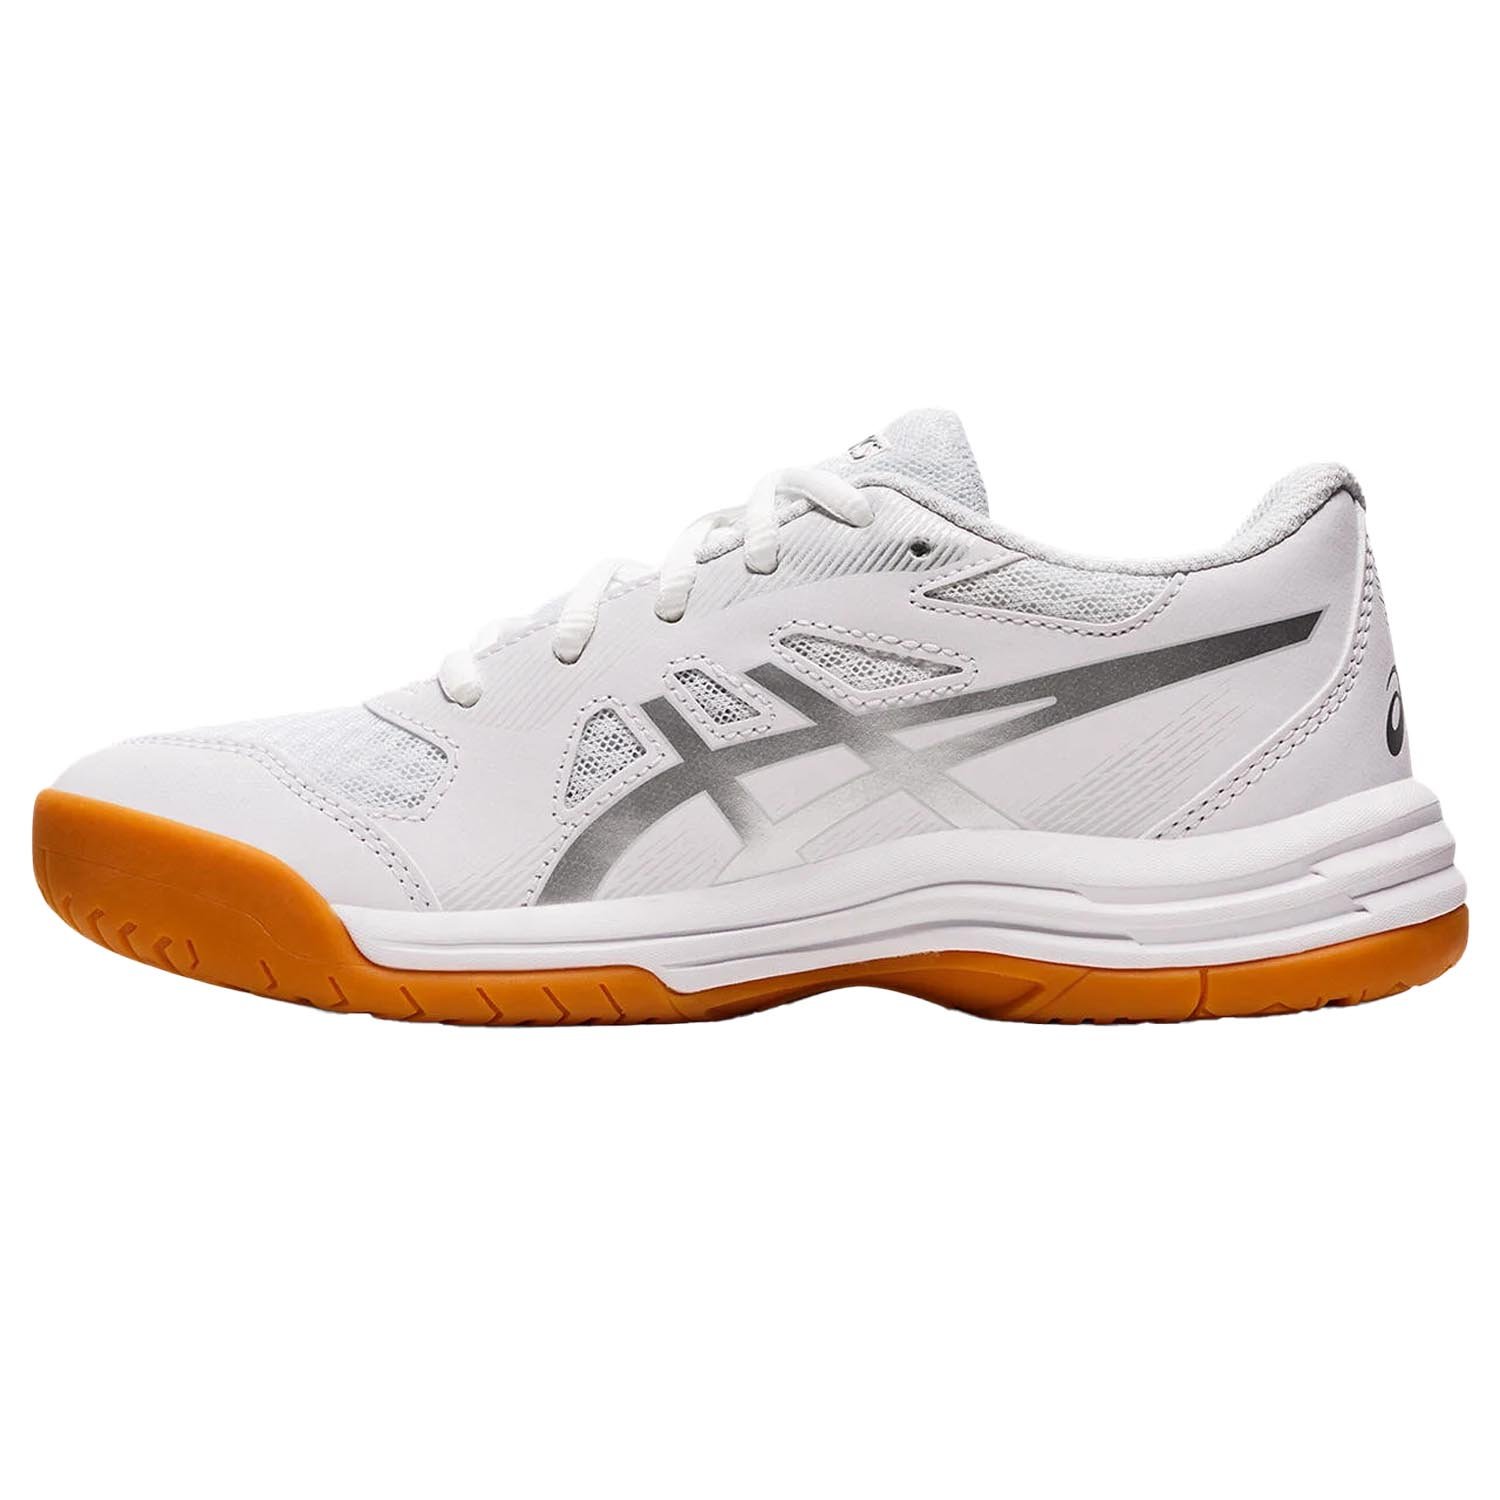 Adidas Upcourt 5 GS Çocuk Tenis Ayakkabısı - Renkli - 1